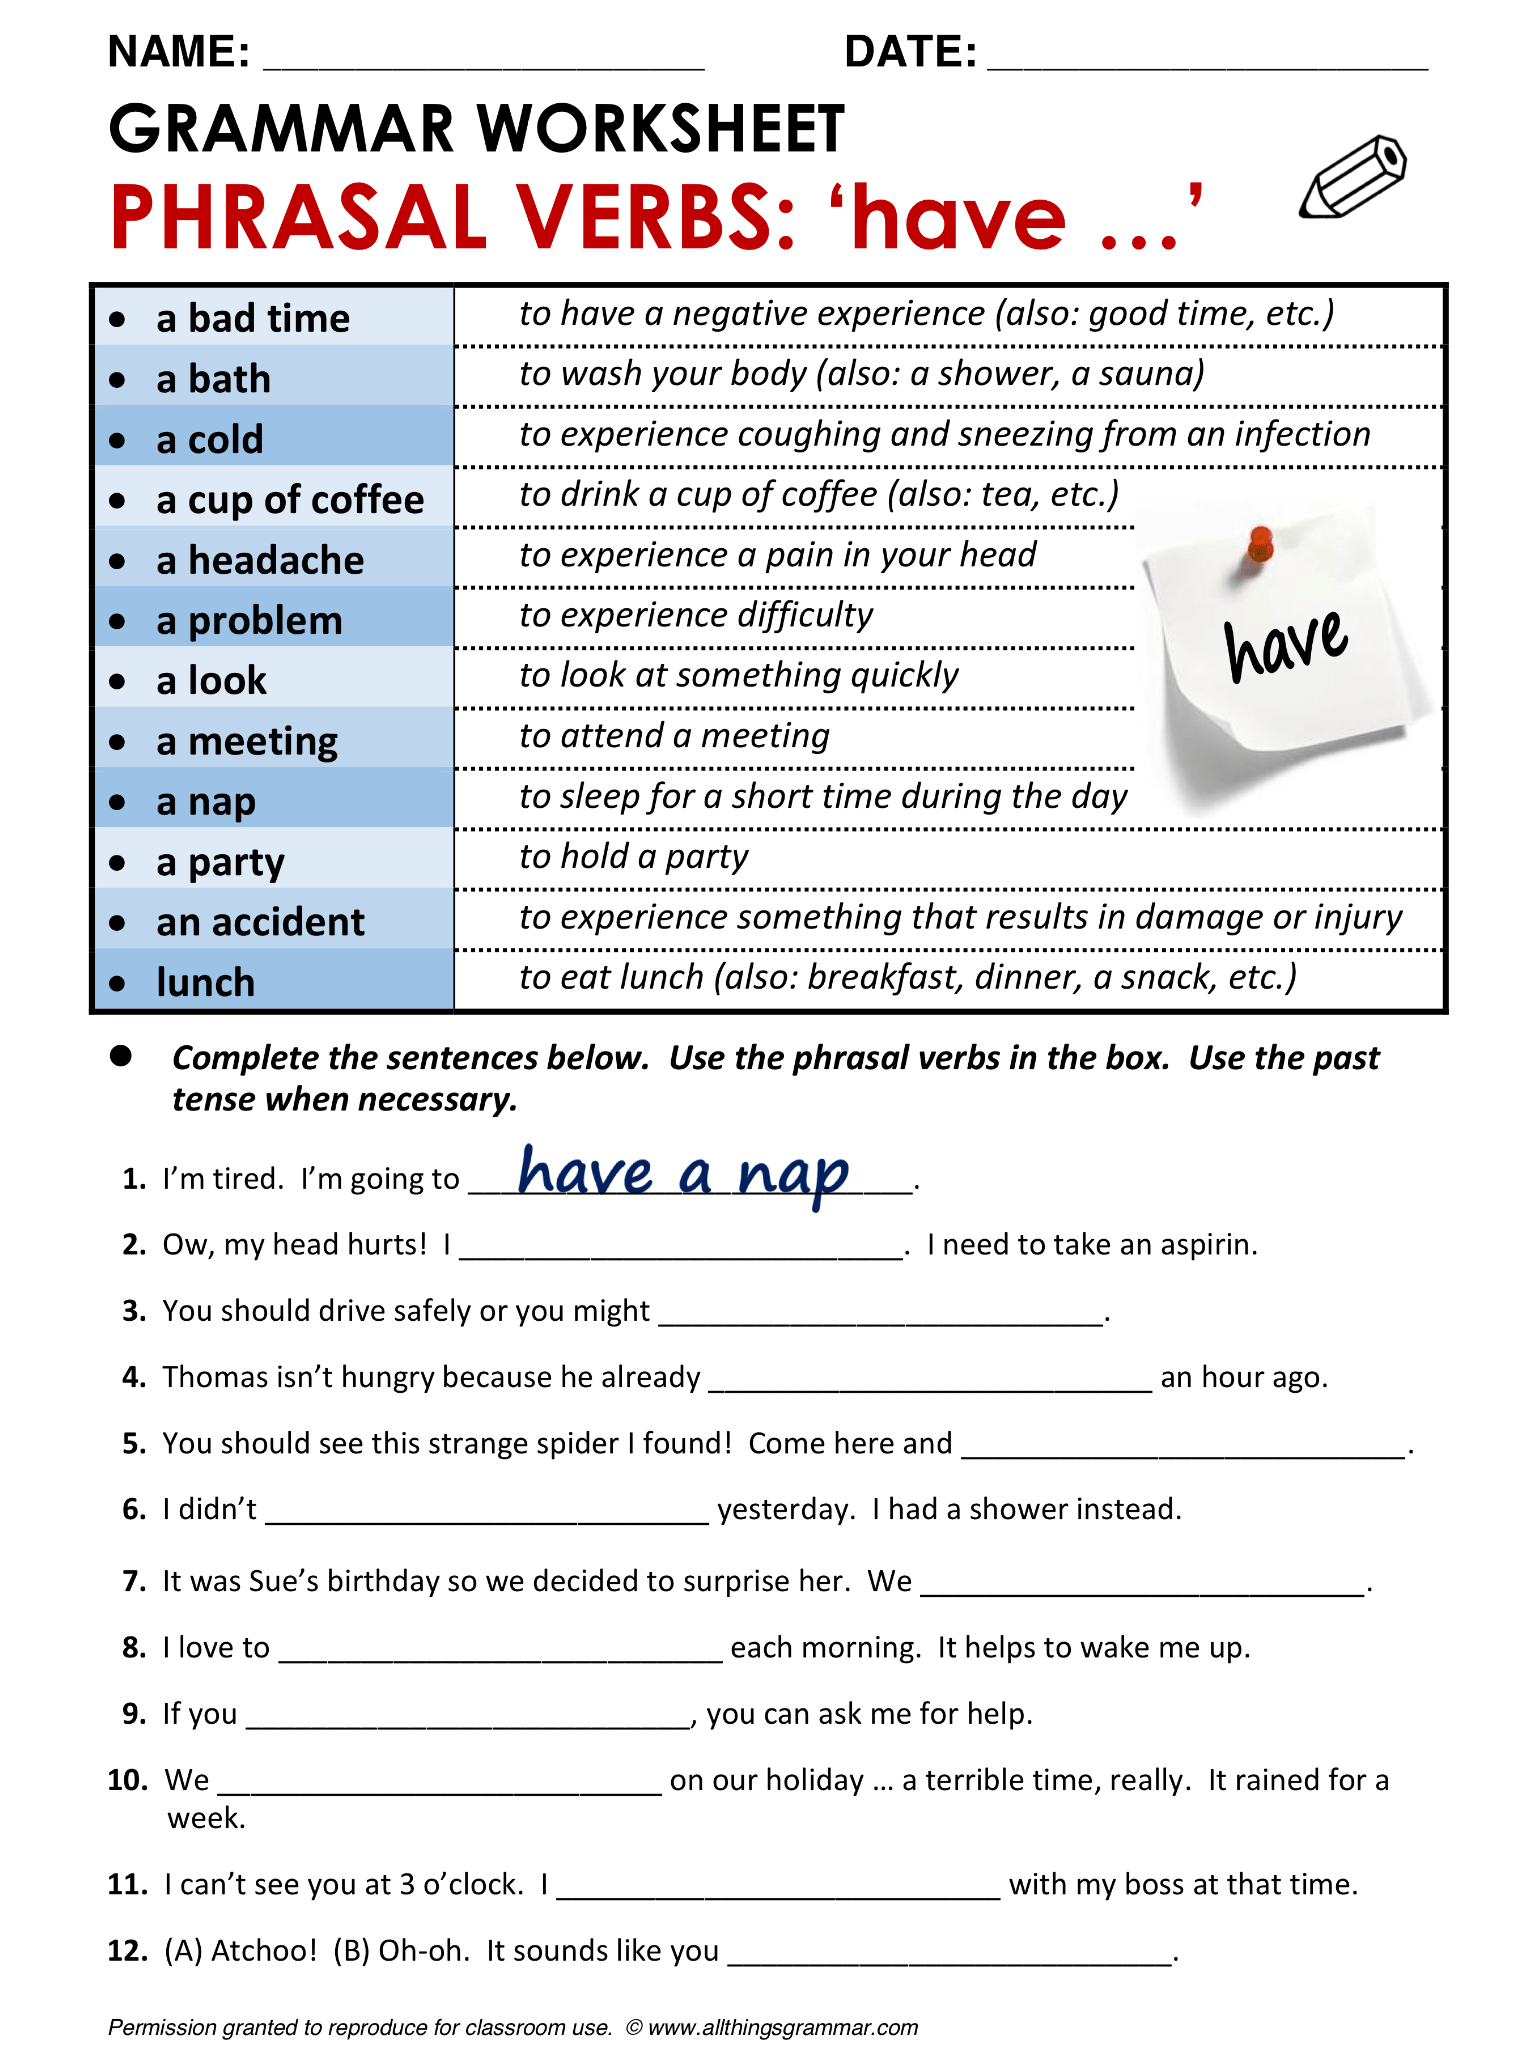 printable-english-worksheets-for-middle-school-lyana-worksheets